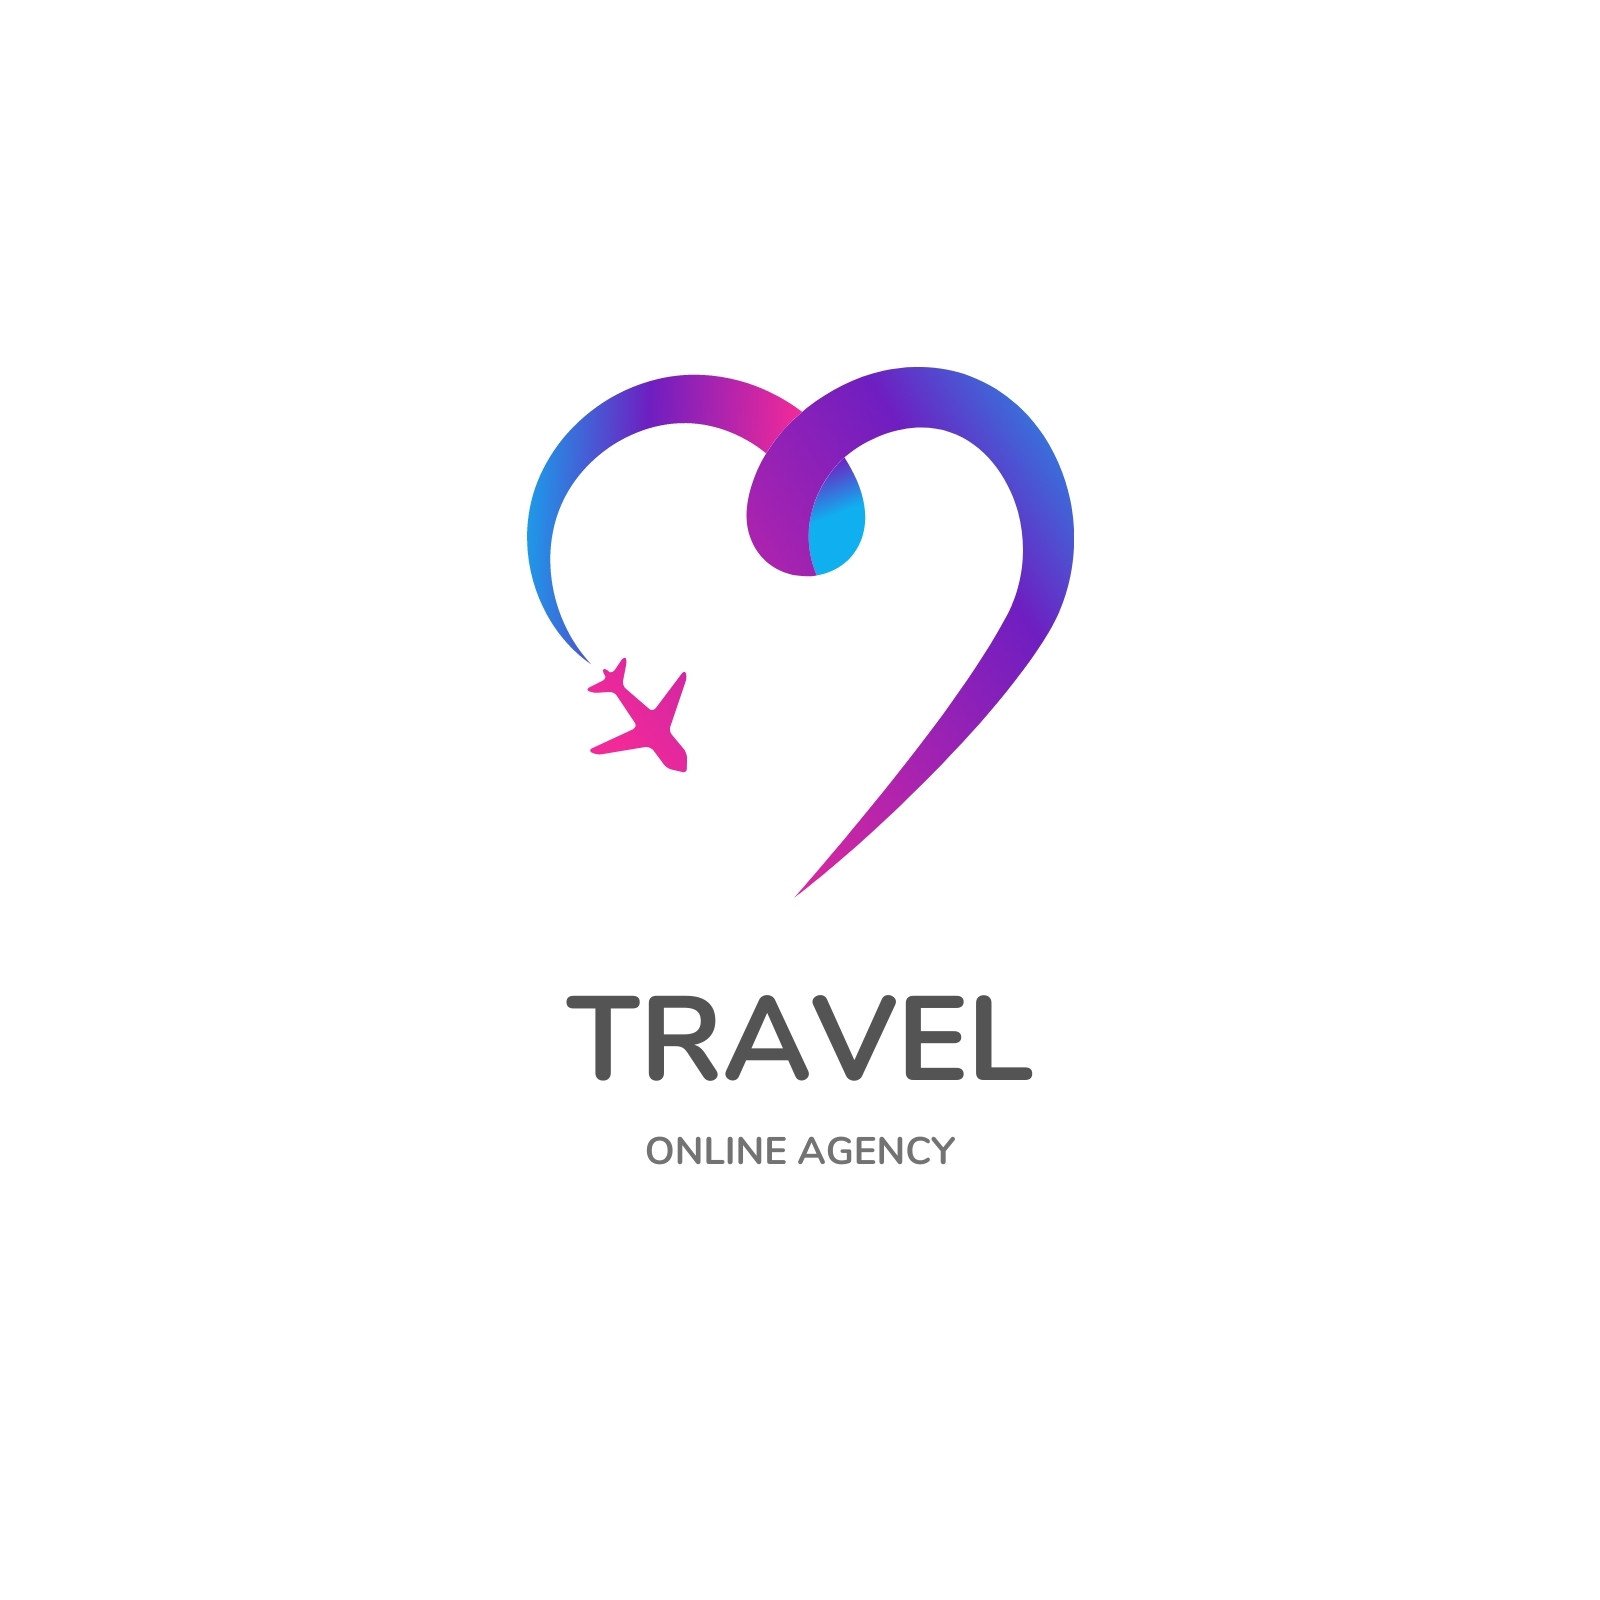 Customize 1,802+ Travel Logo Templates Online - Canva